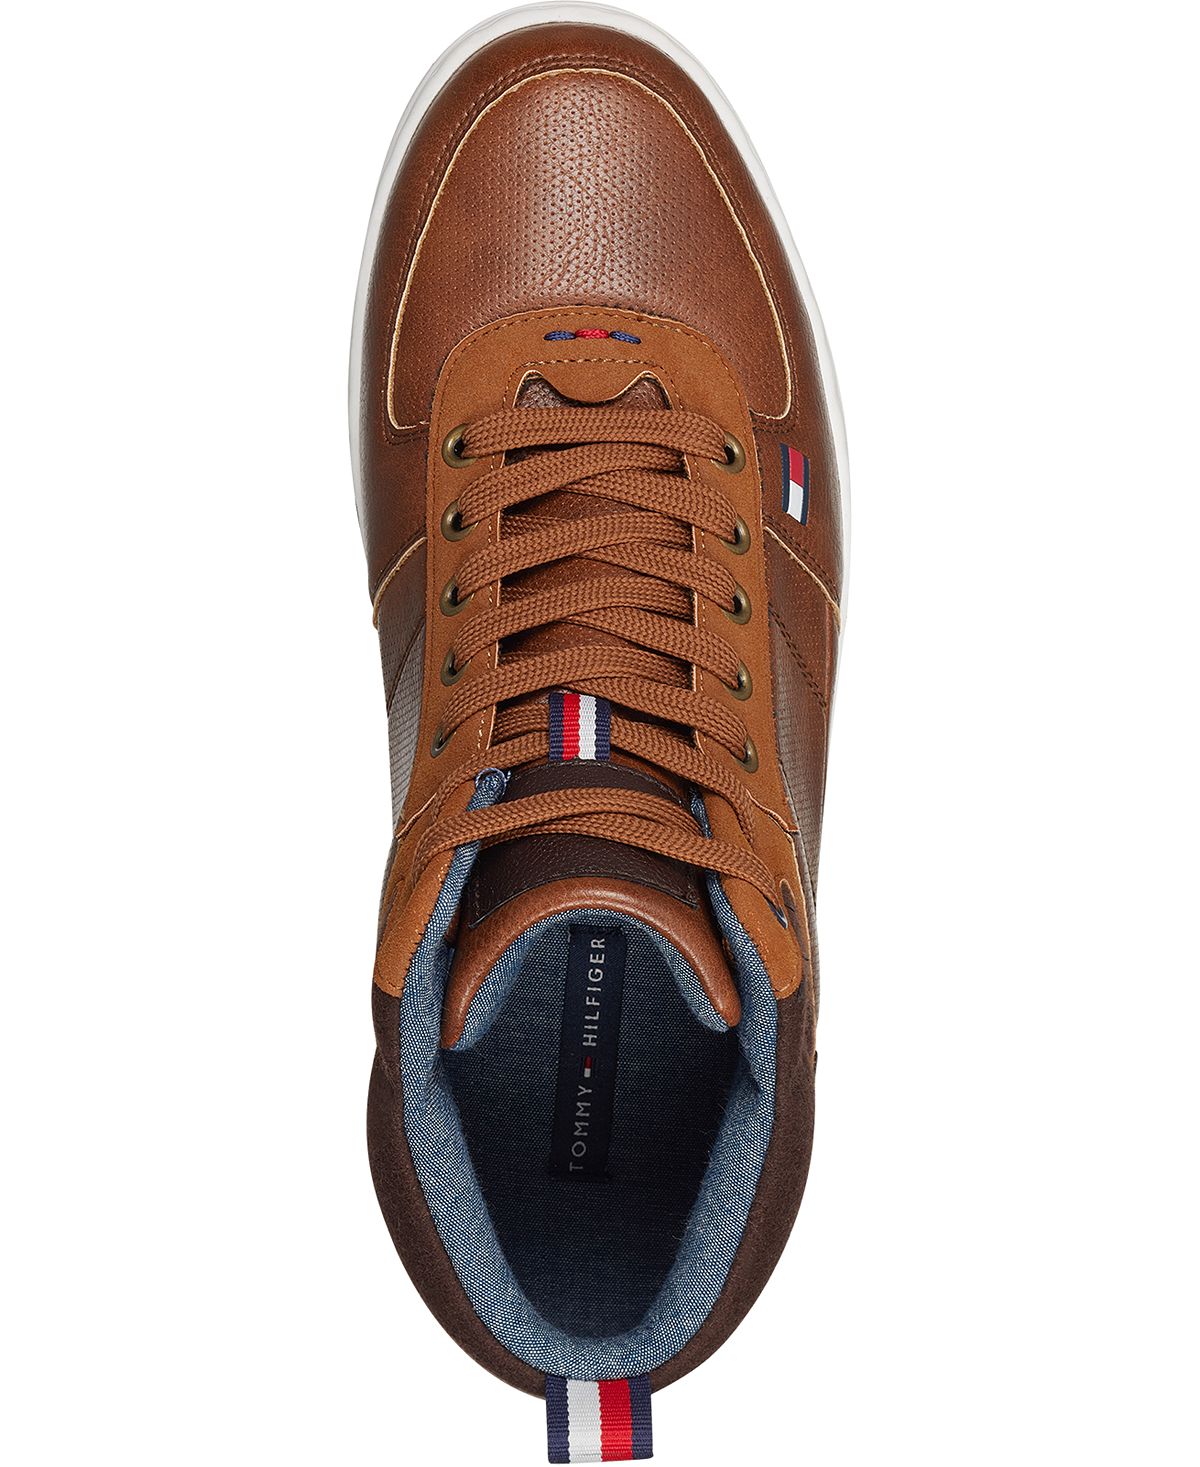 Tommy Hilfiger Manzu Sneaker Boots Cognac